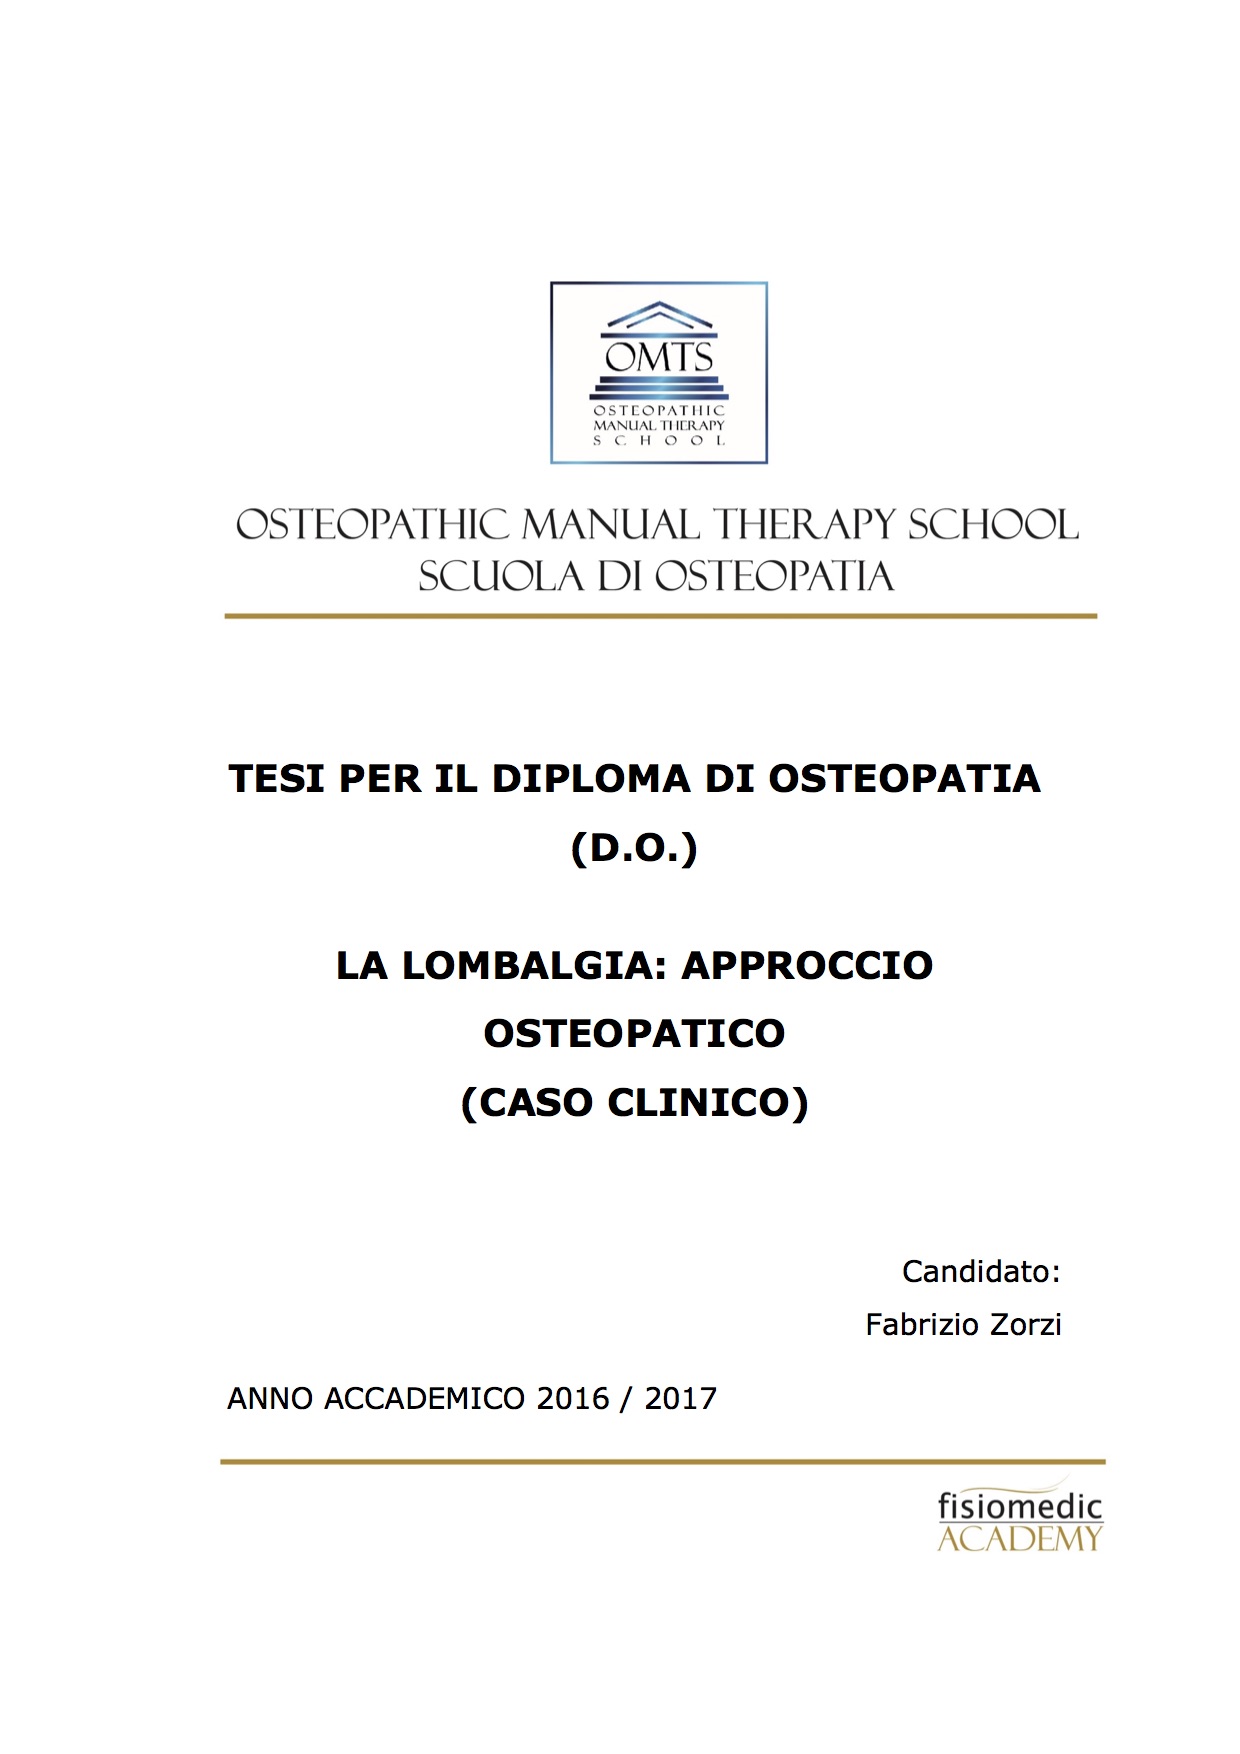 Fabrizio Zorzi Tesi Diploma Osteopatia 2017